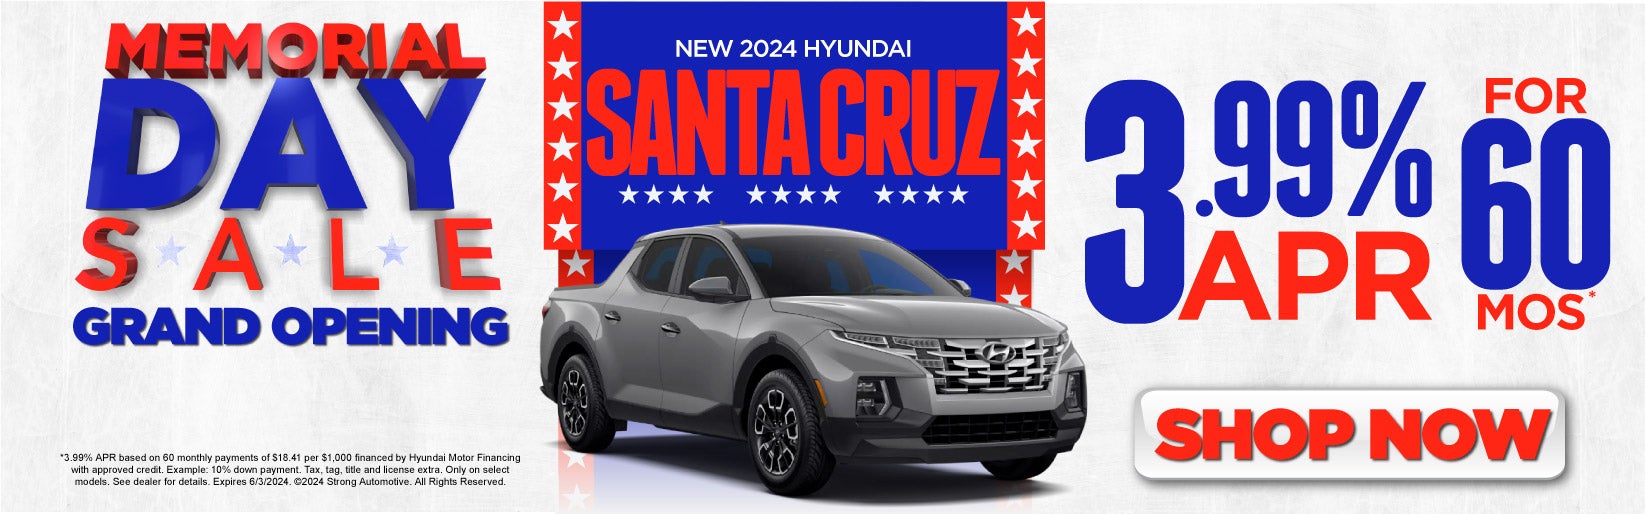 New 2024 Hyundai Santa Cruz - 3.99% APR for 60 mos*